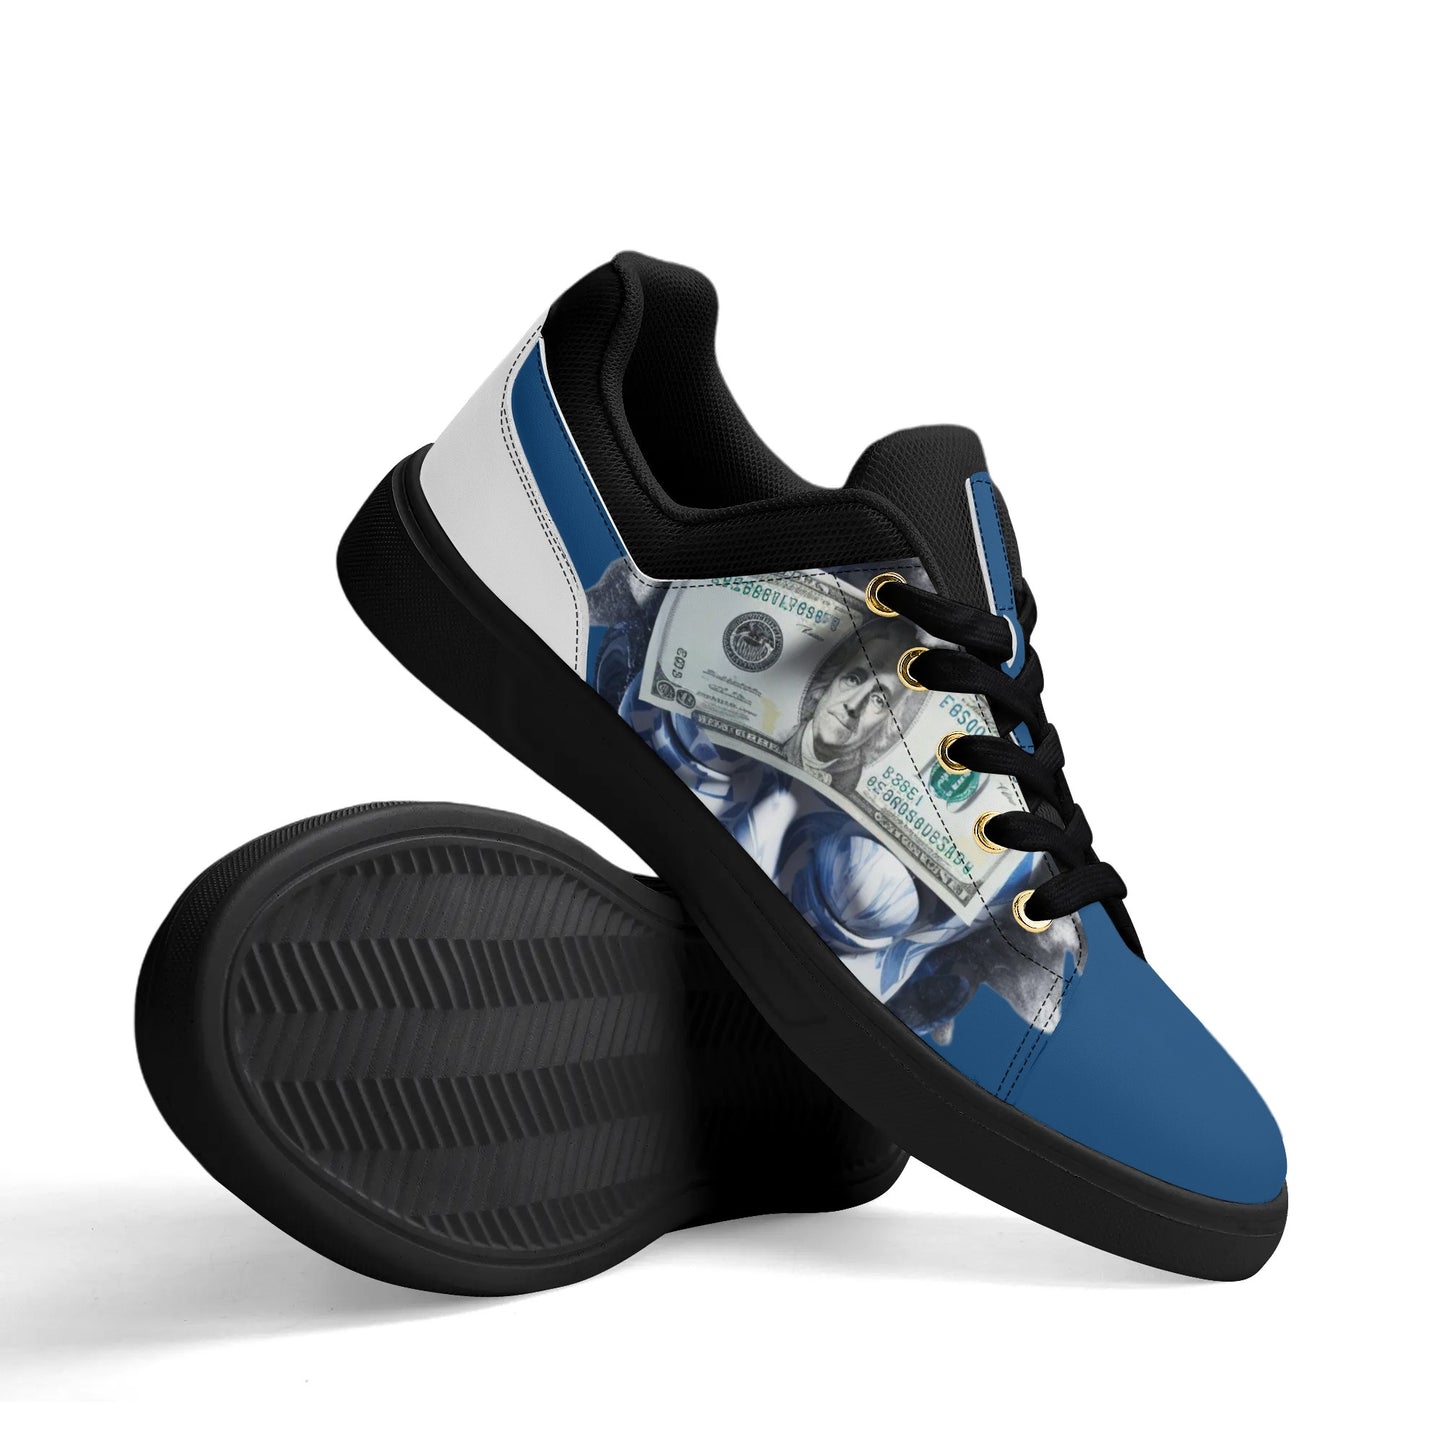 DRIP HEADZ (Unisex Low Top  Skateboard Shoes)